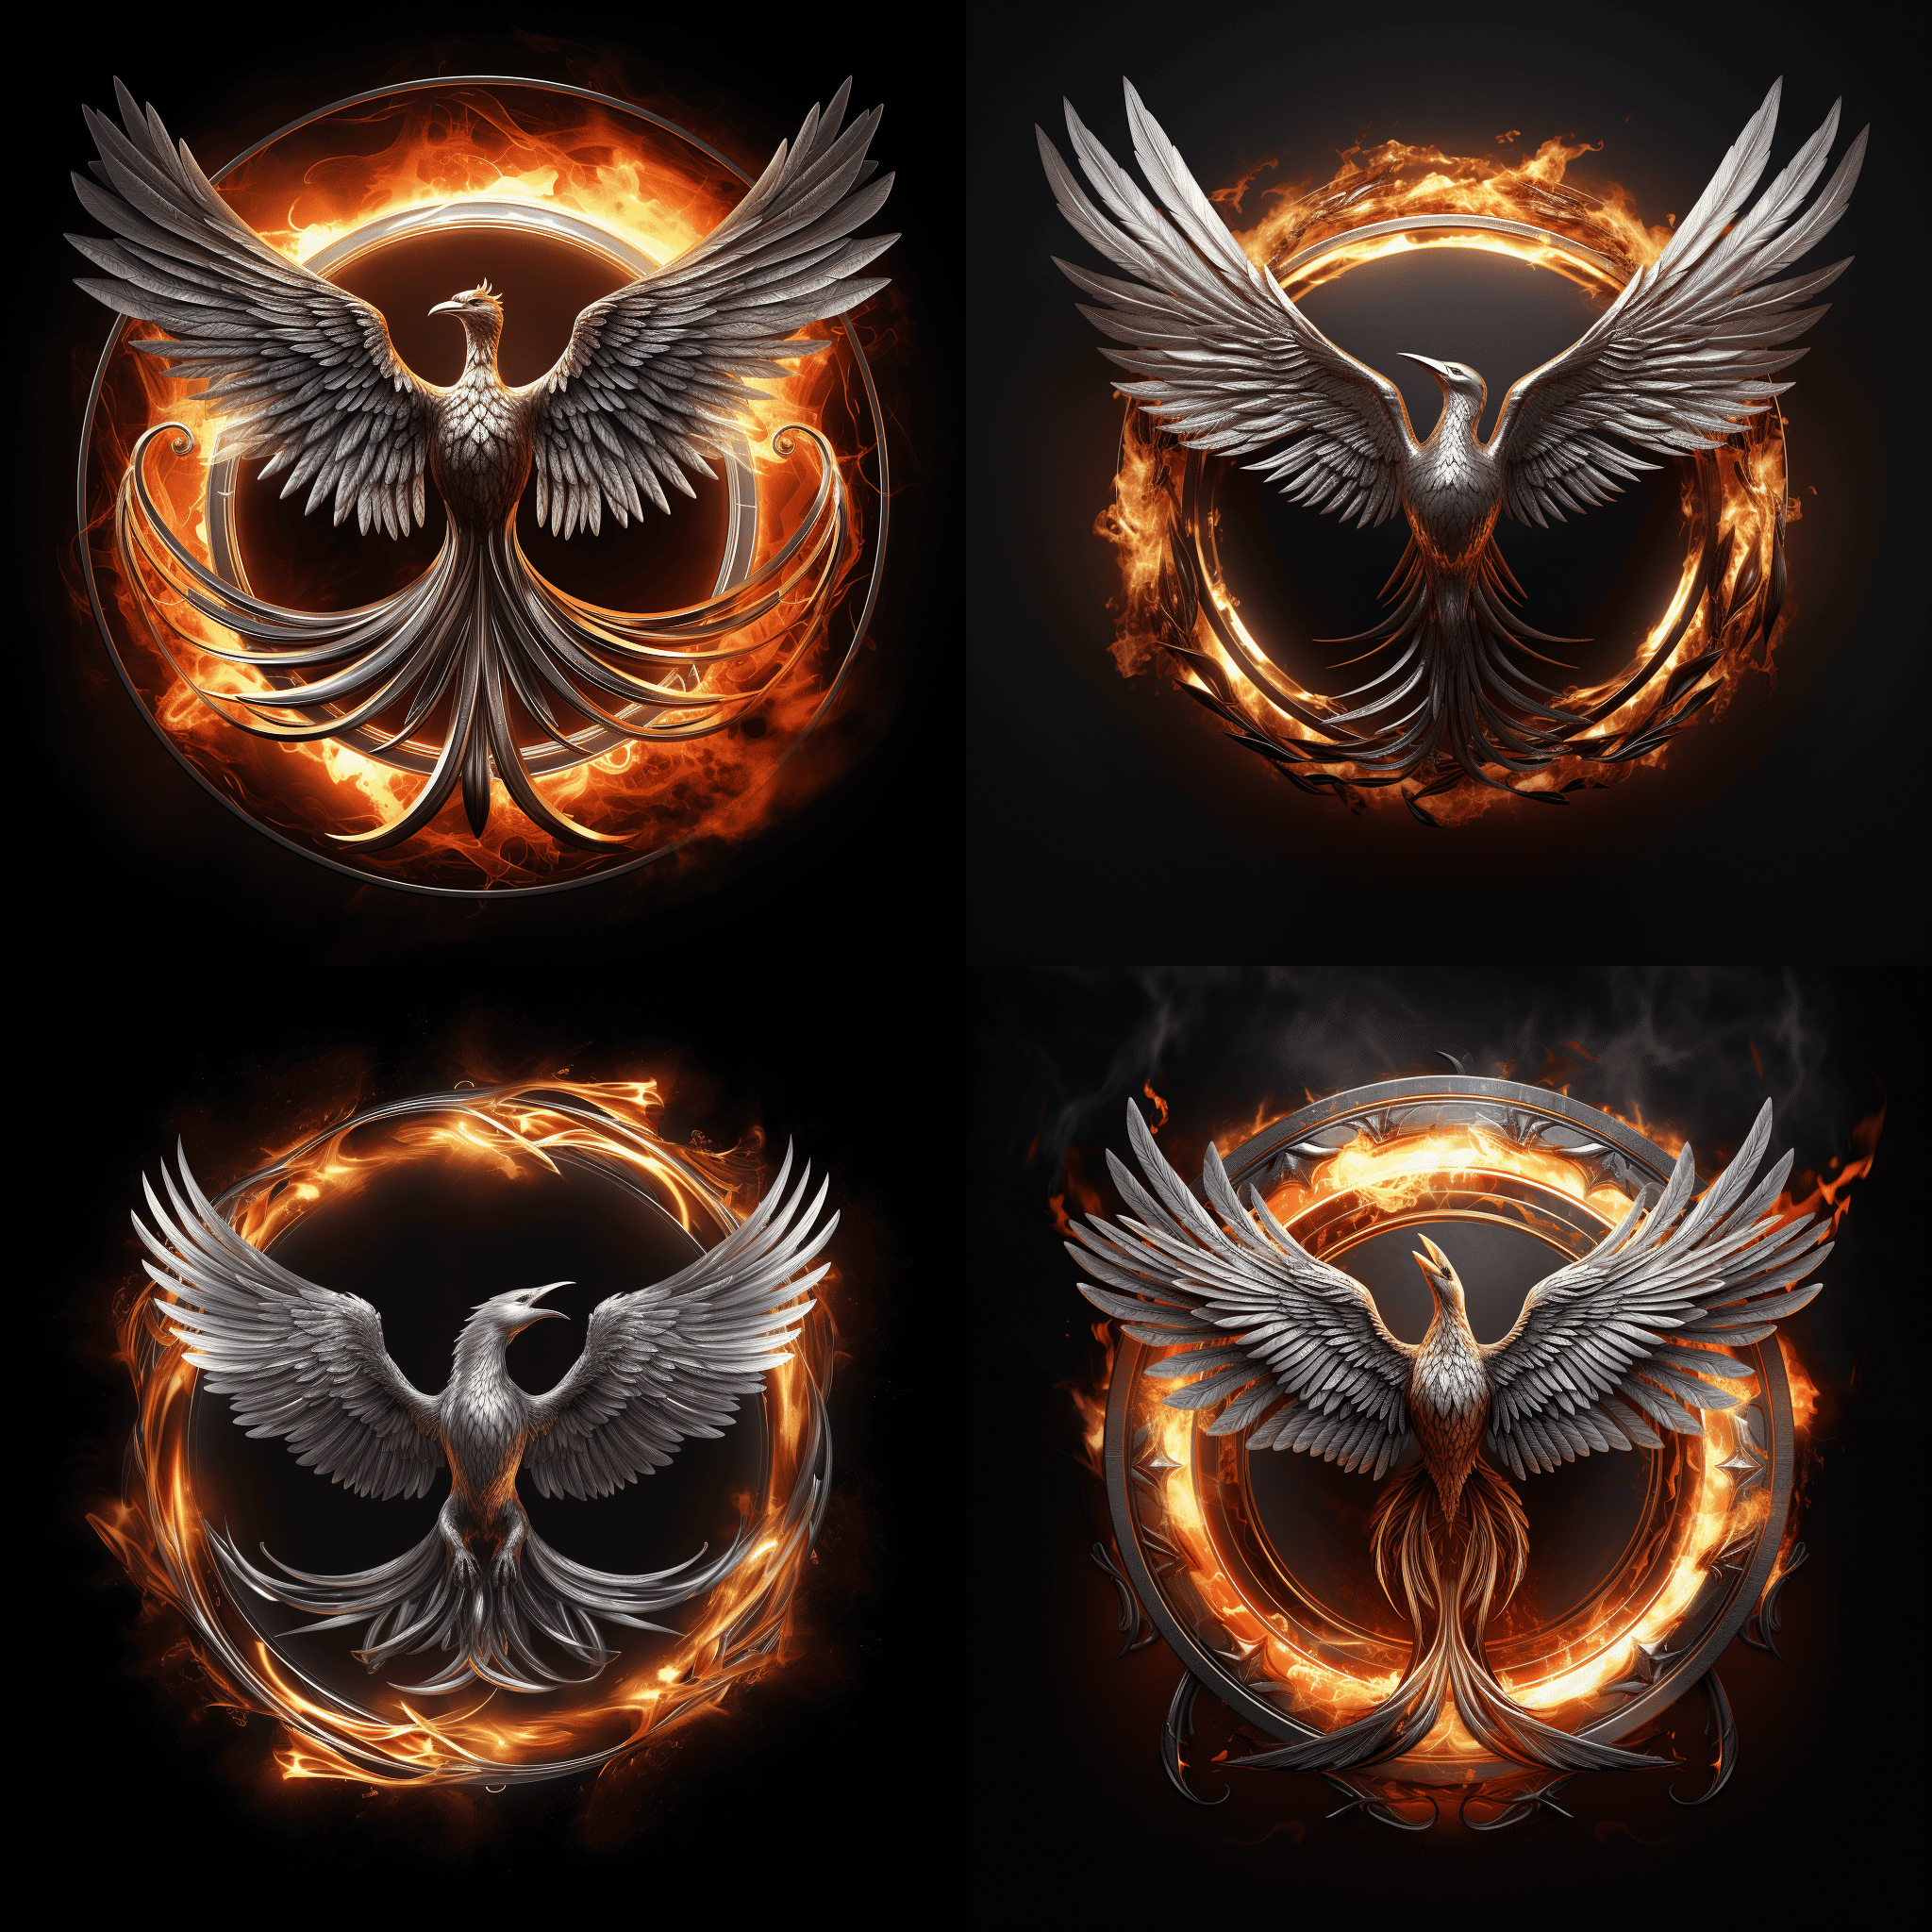 A sleek silver phoenix emblem, wings spread wide, encircled by a ring of fire